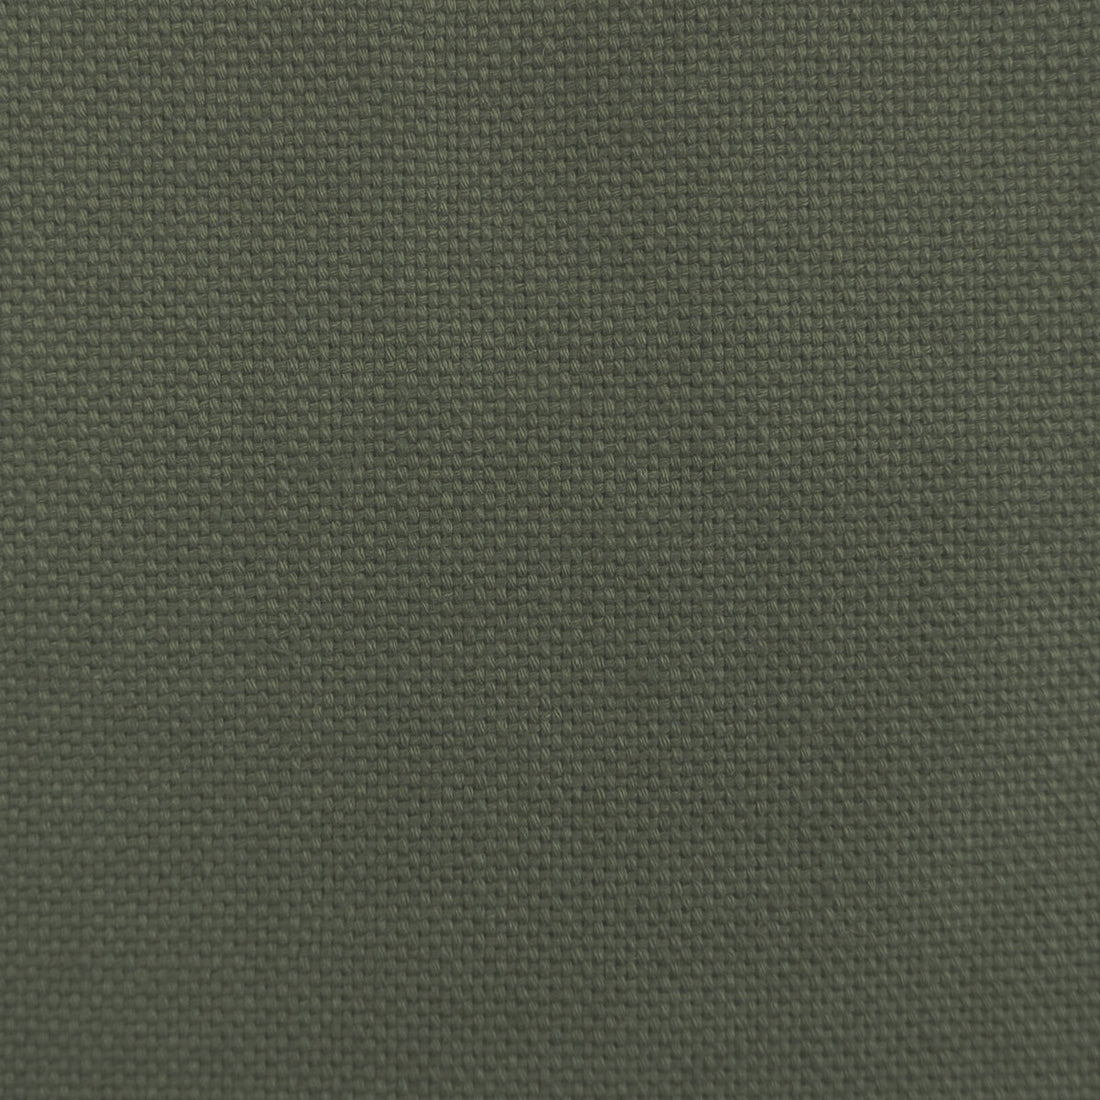 Dobra fabric in verde claro color - pattern LCT1075.027.0 - by Gaston y Daniela in the Lorenzo Castillo VII The Rectory collection